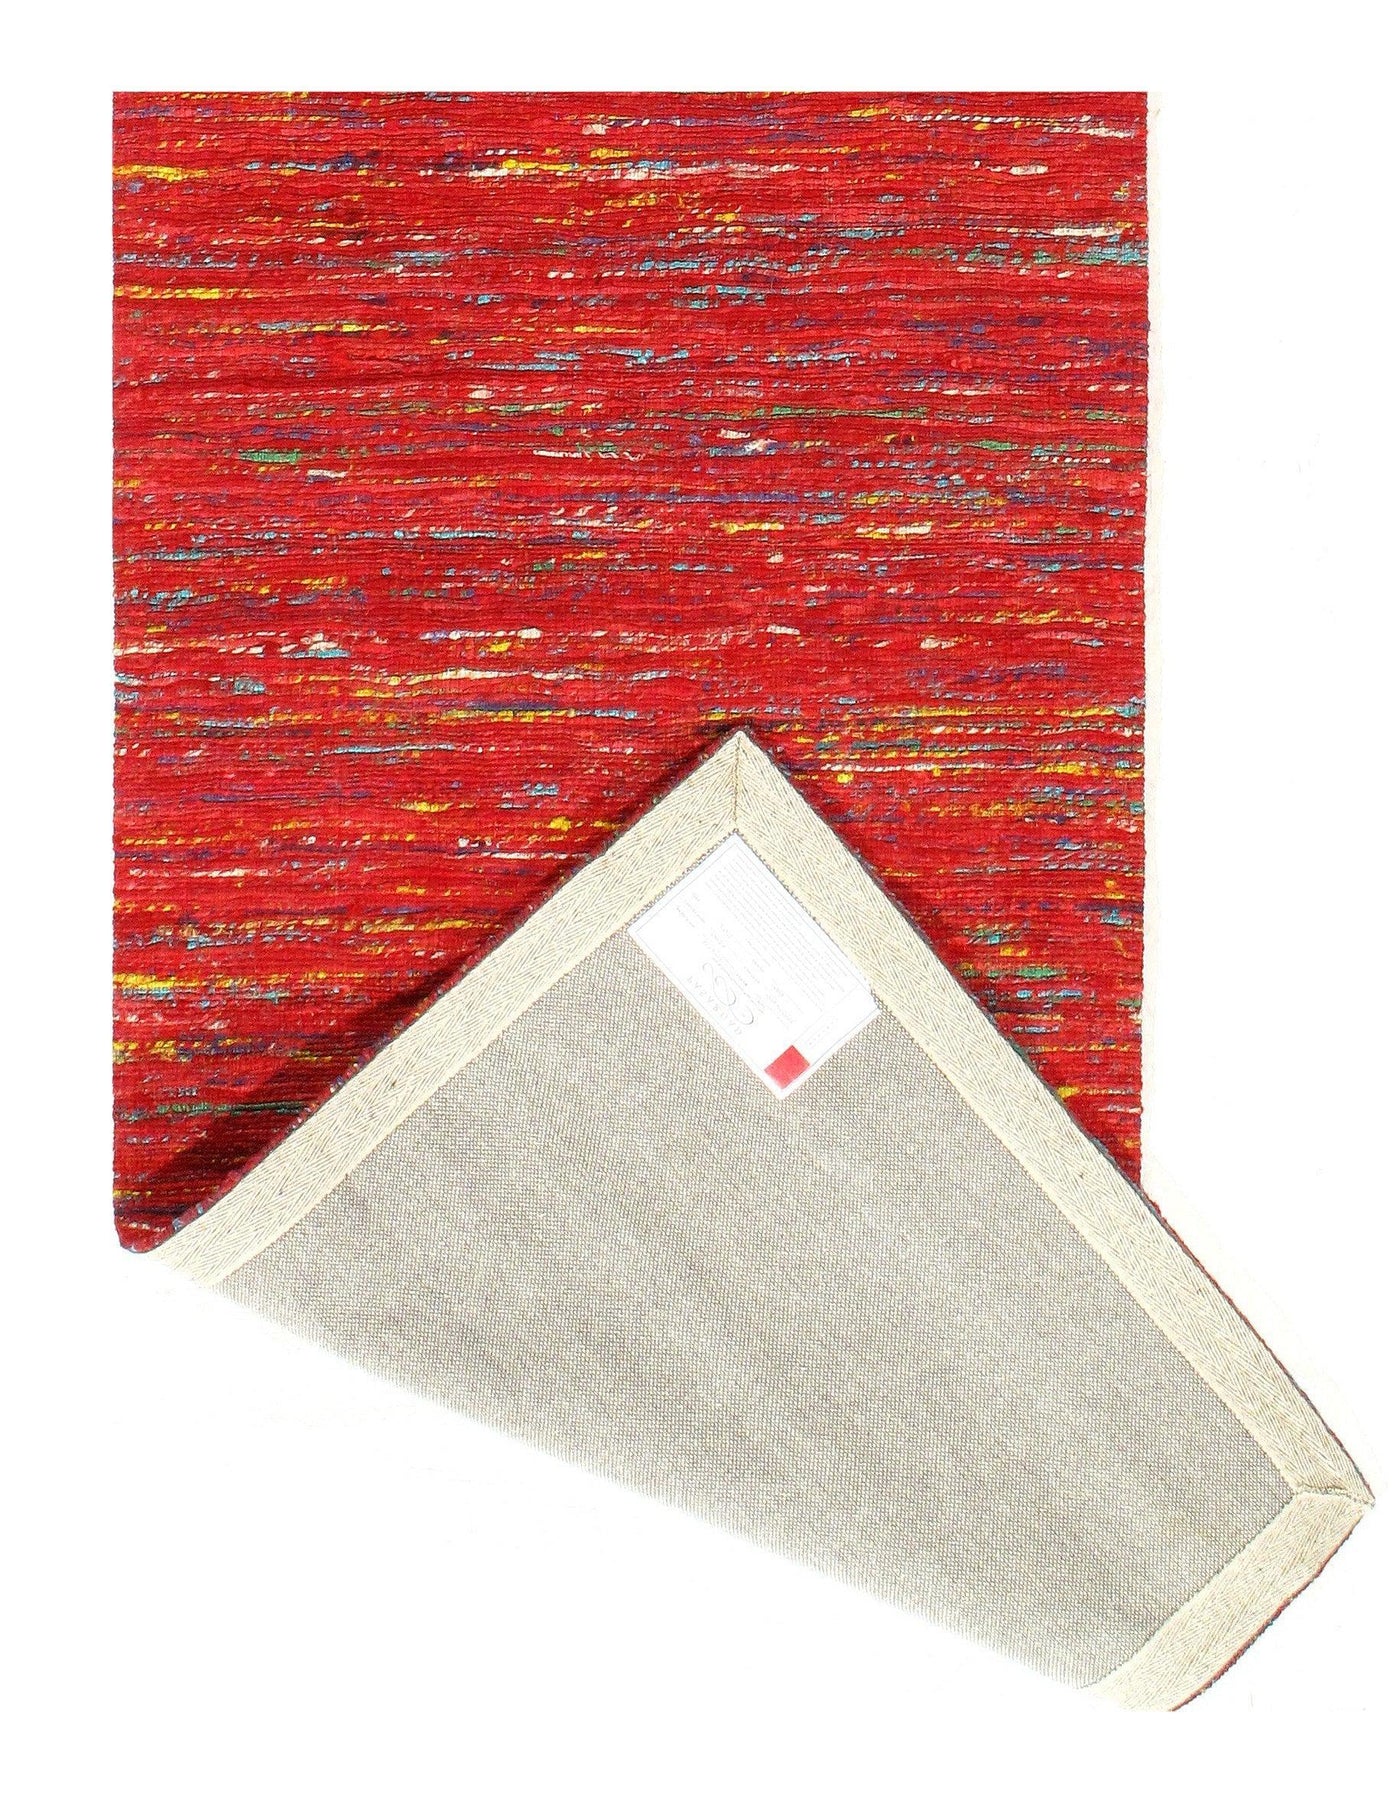 Red Sari-Silk Modern Flat Weave Runner 2'4'' X 10